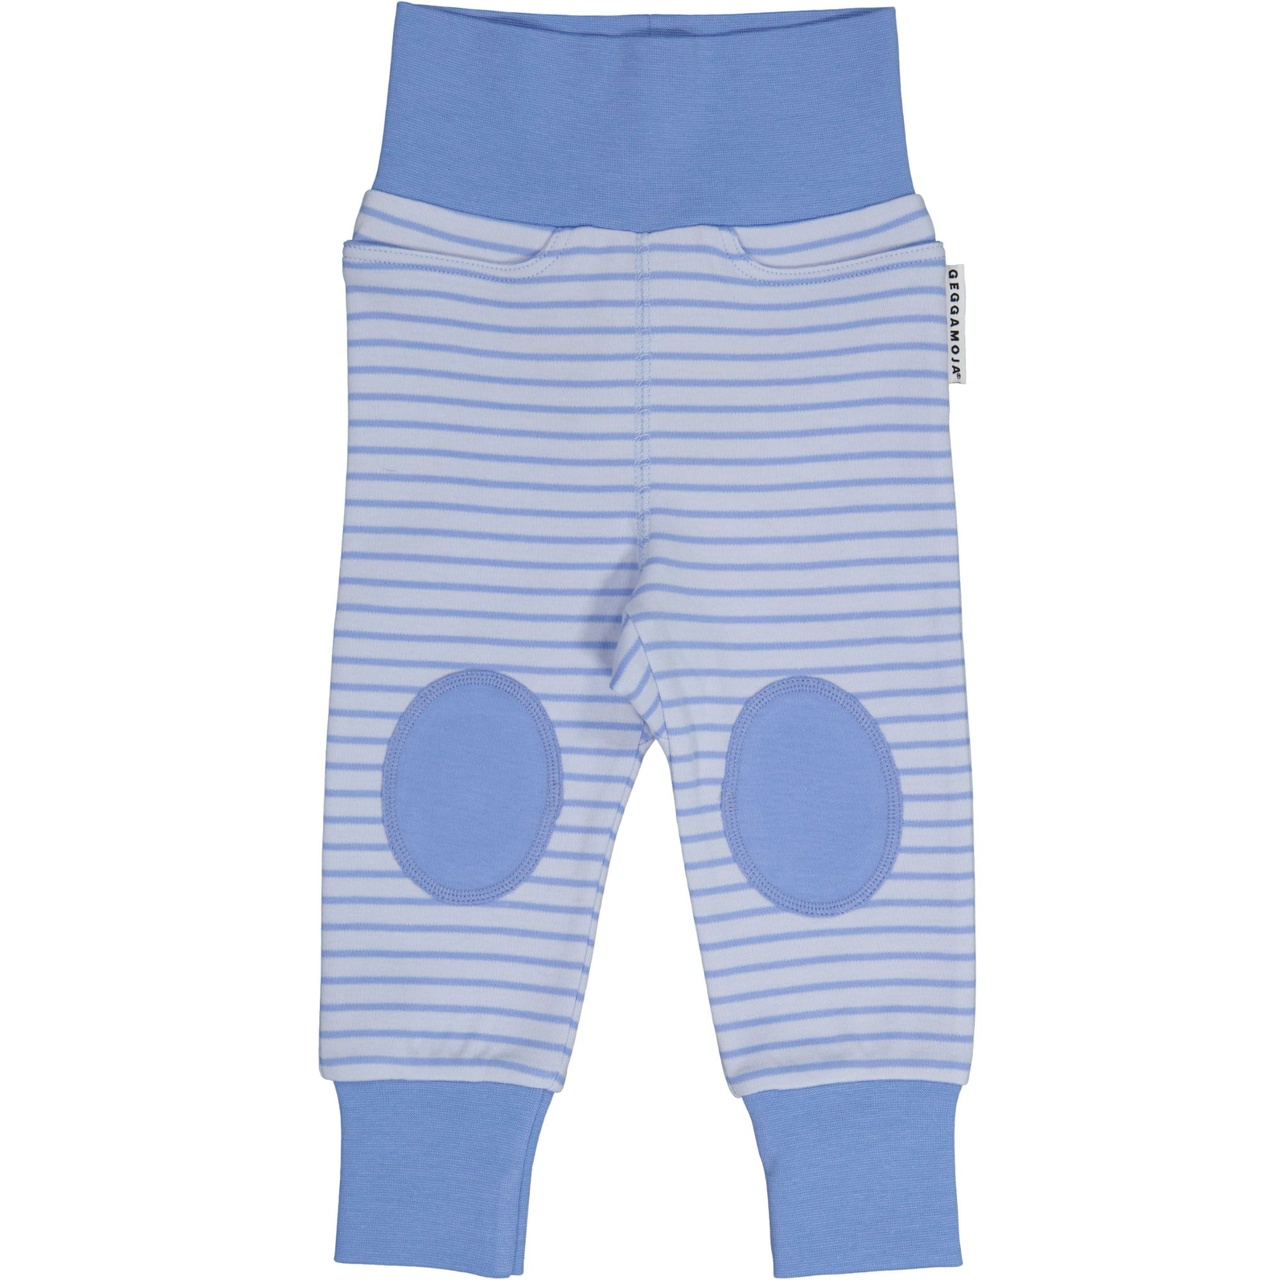 Baby pants Light blue/blue  62/68